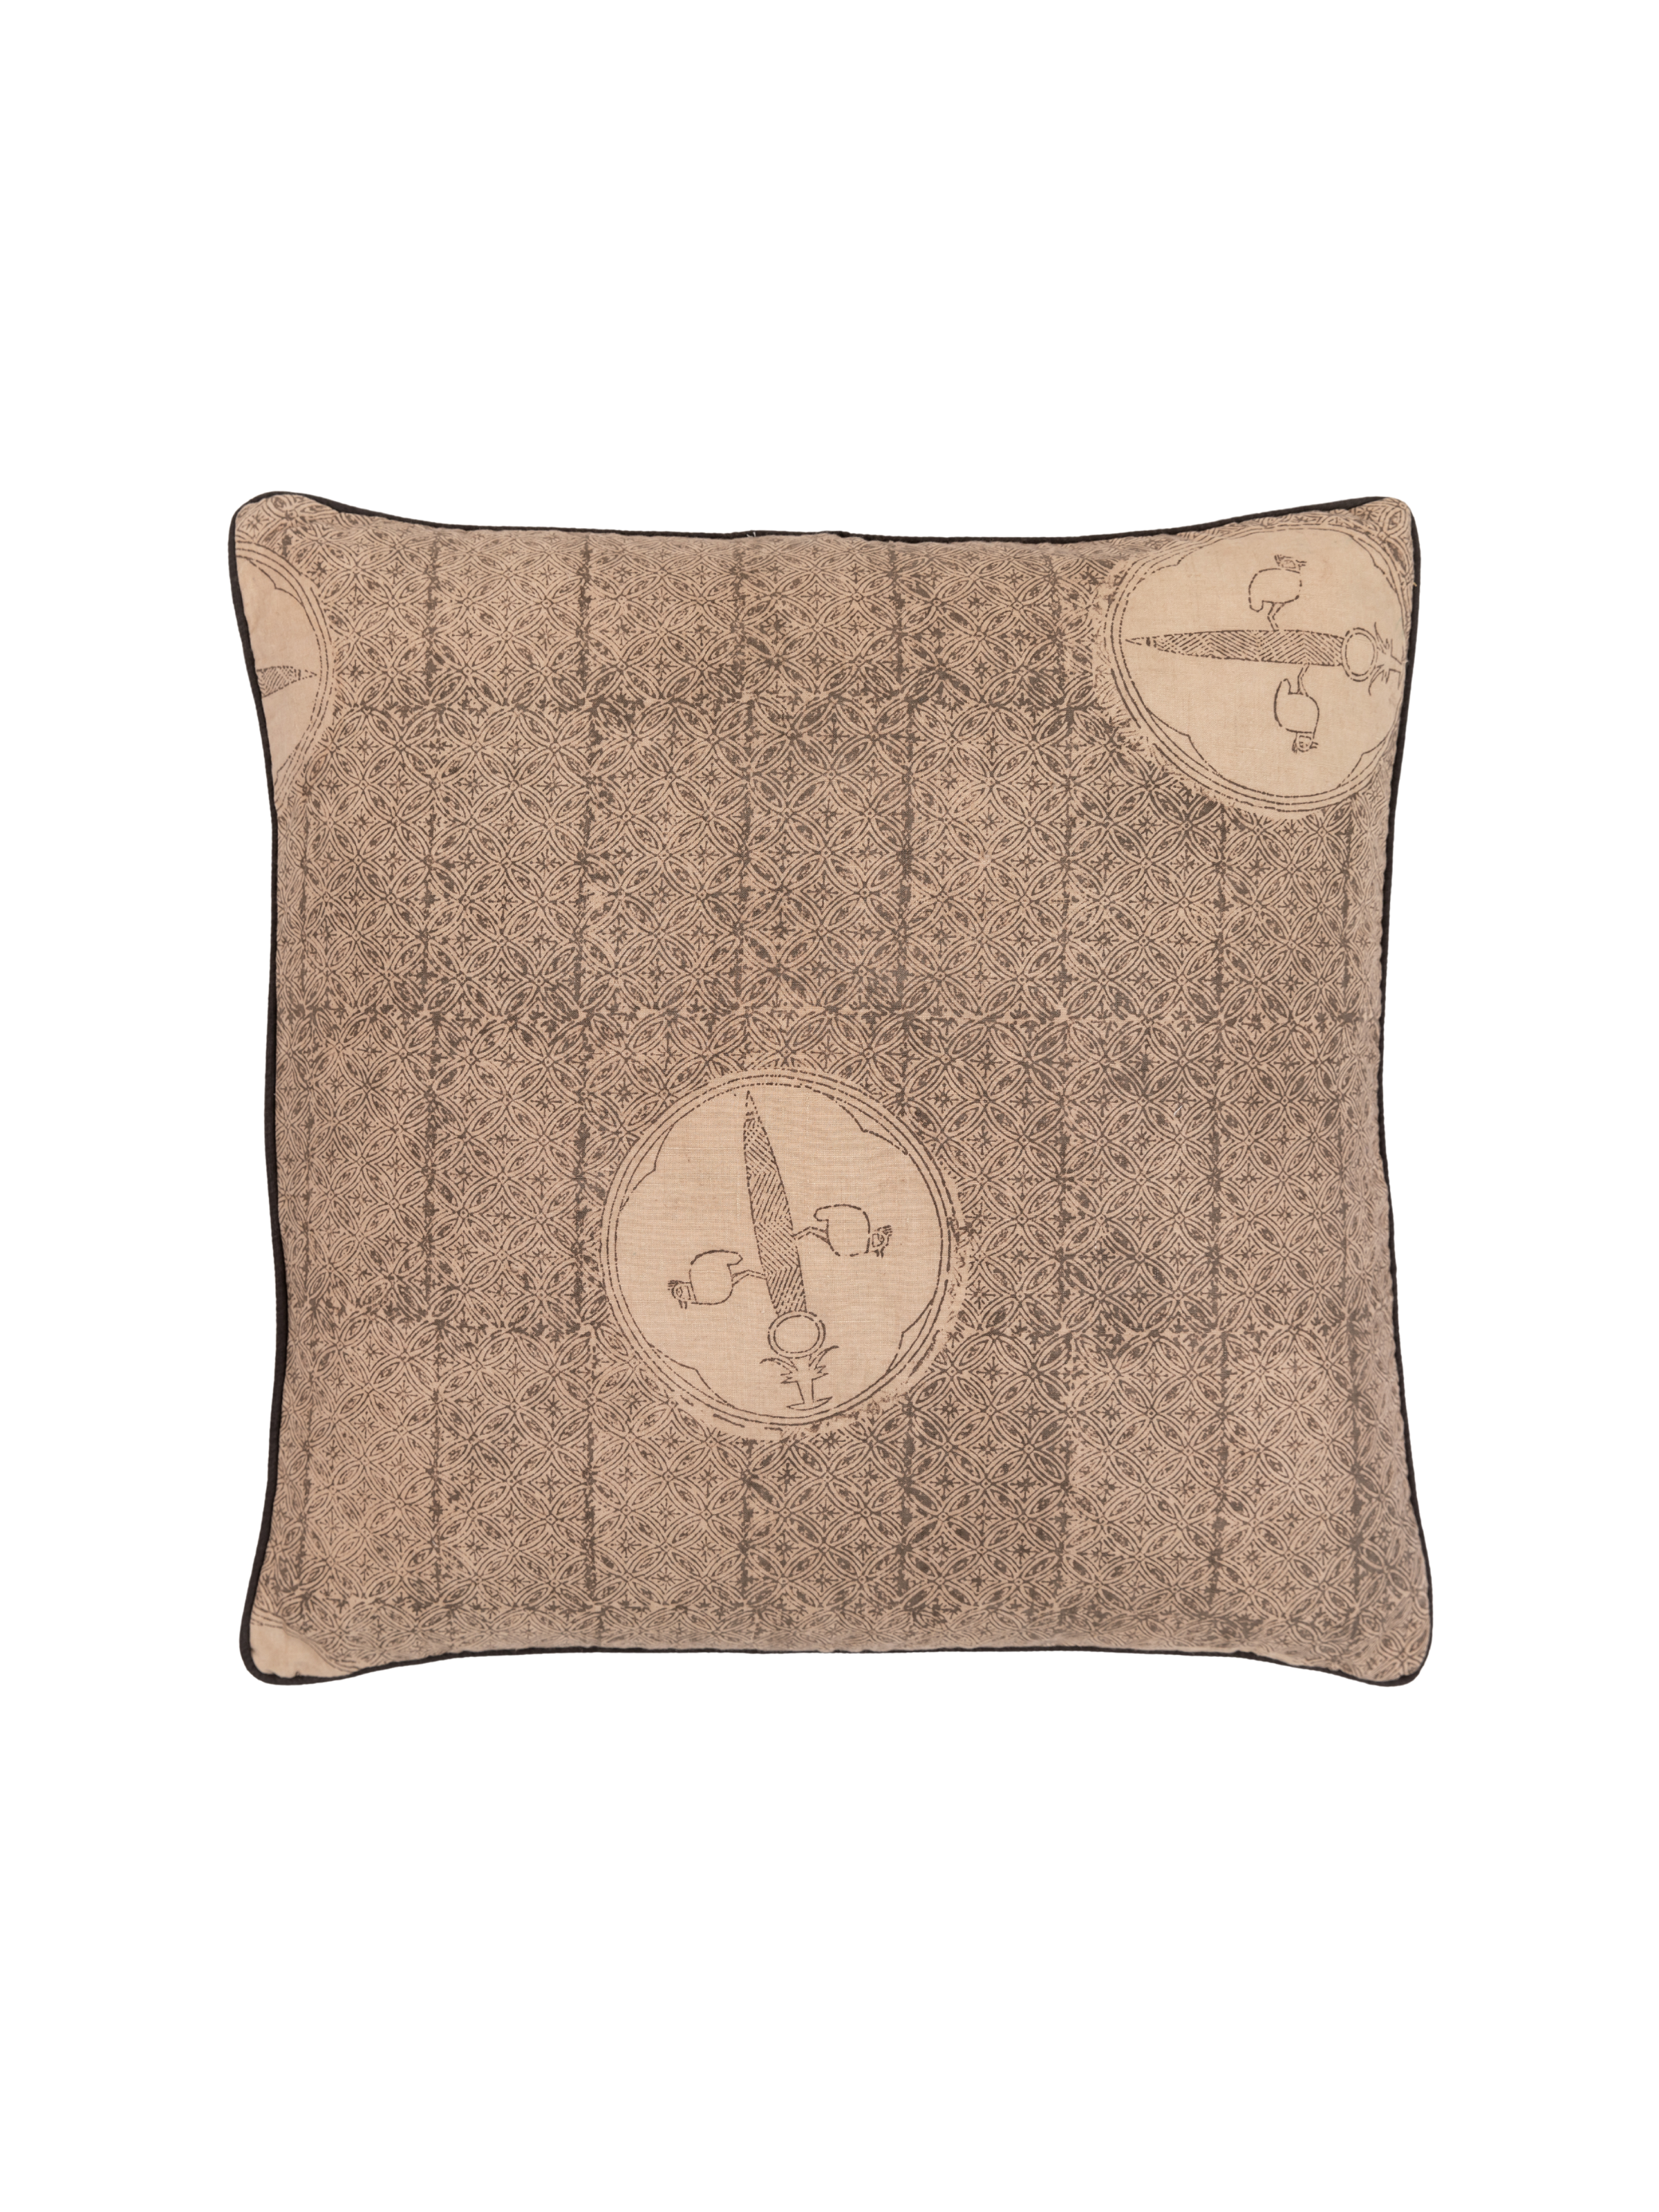 Anasazi Sulawesi Decorative Pillow Cover